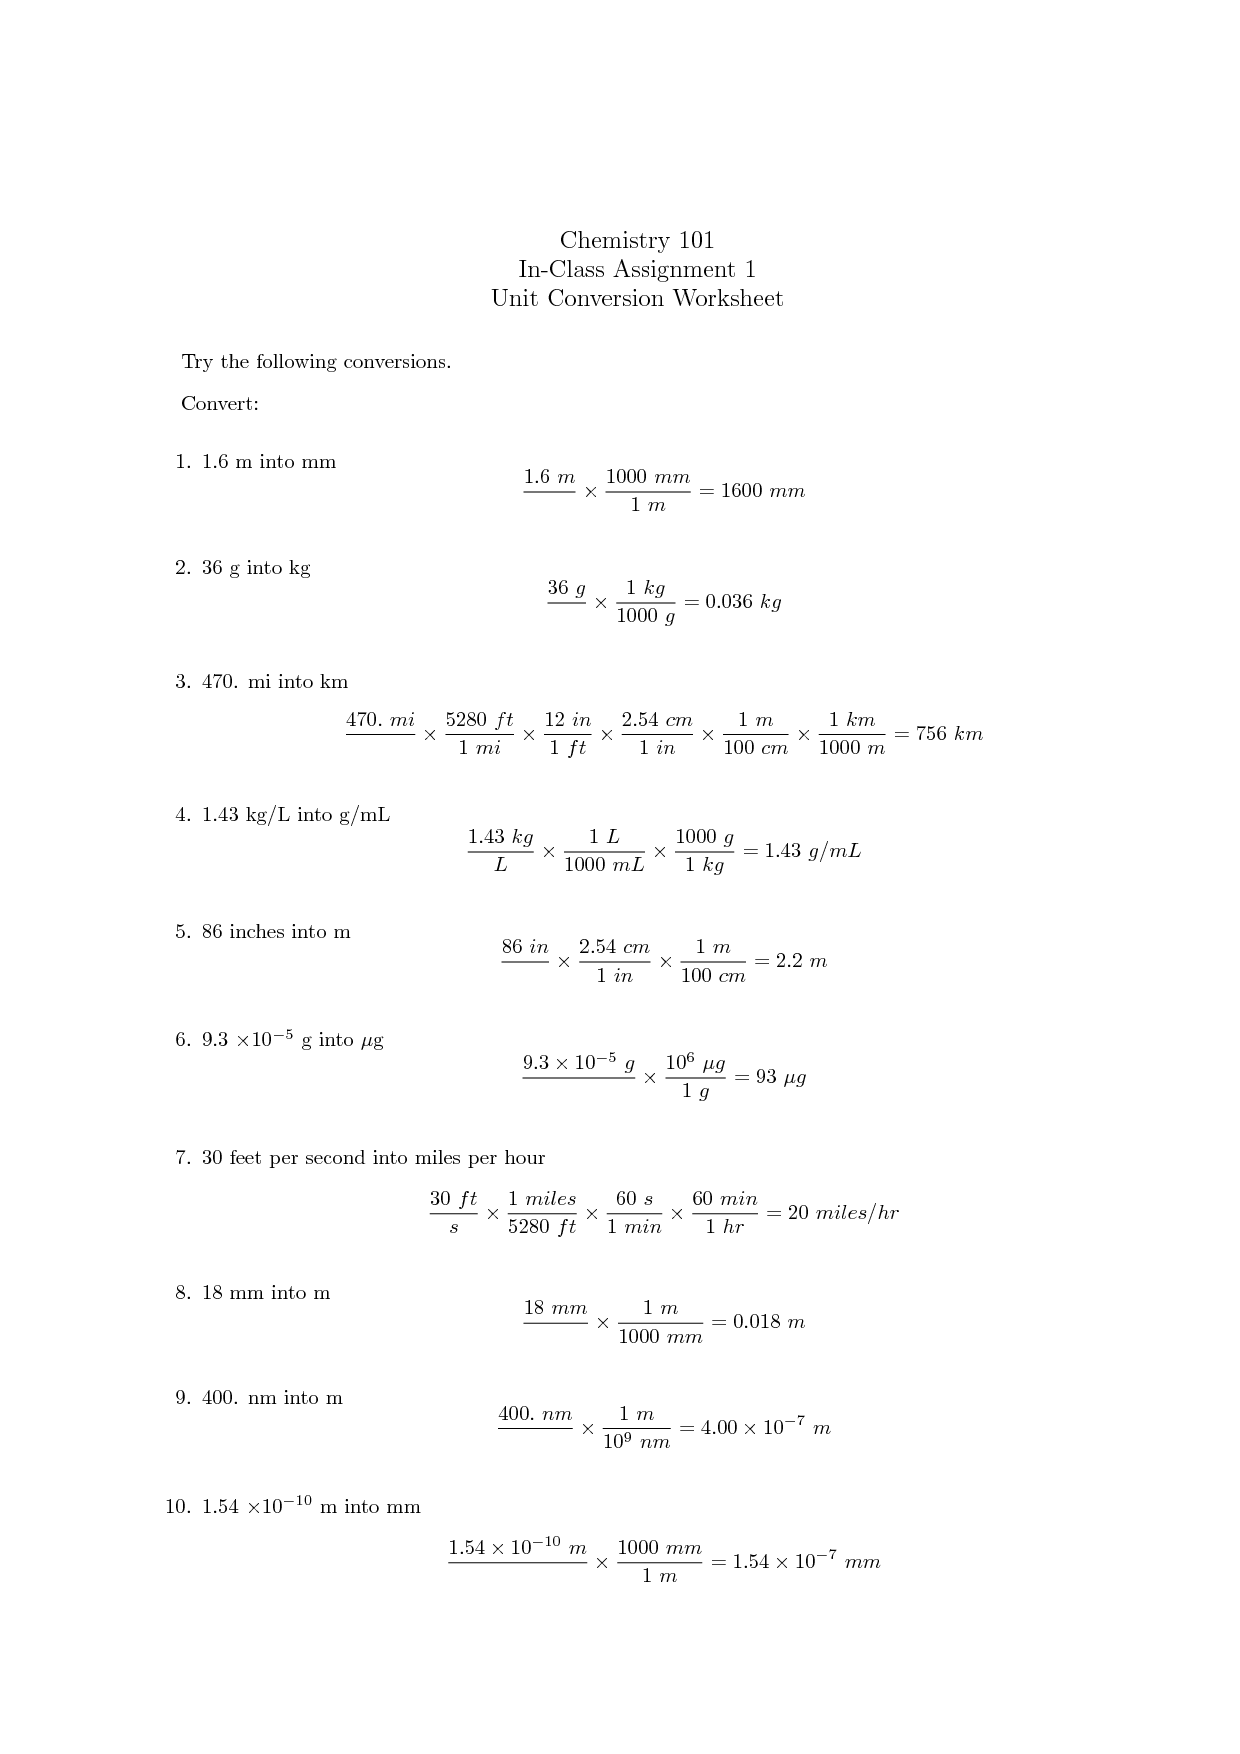 15 Best Images of Chemistry Unit 5 Worksheet 1 Chemistry Unit 1